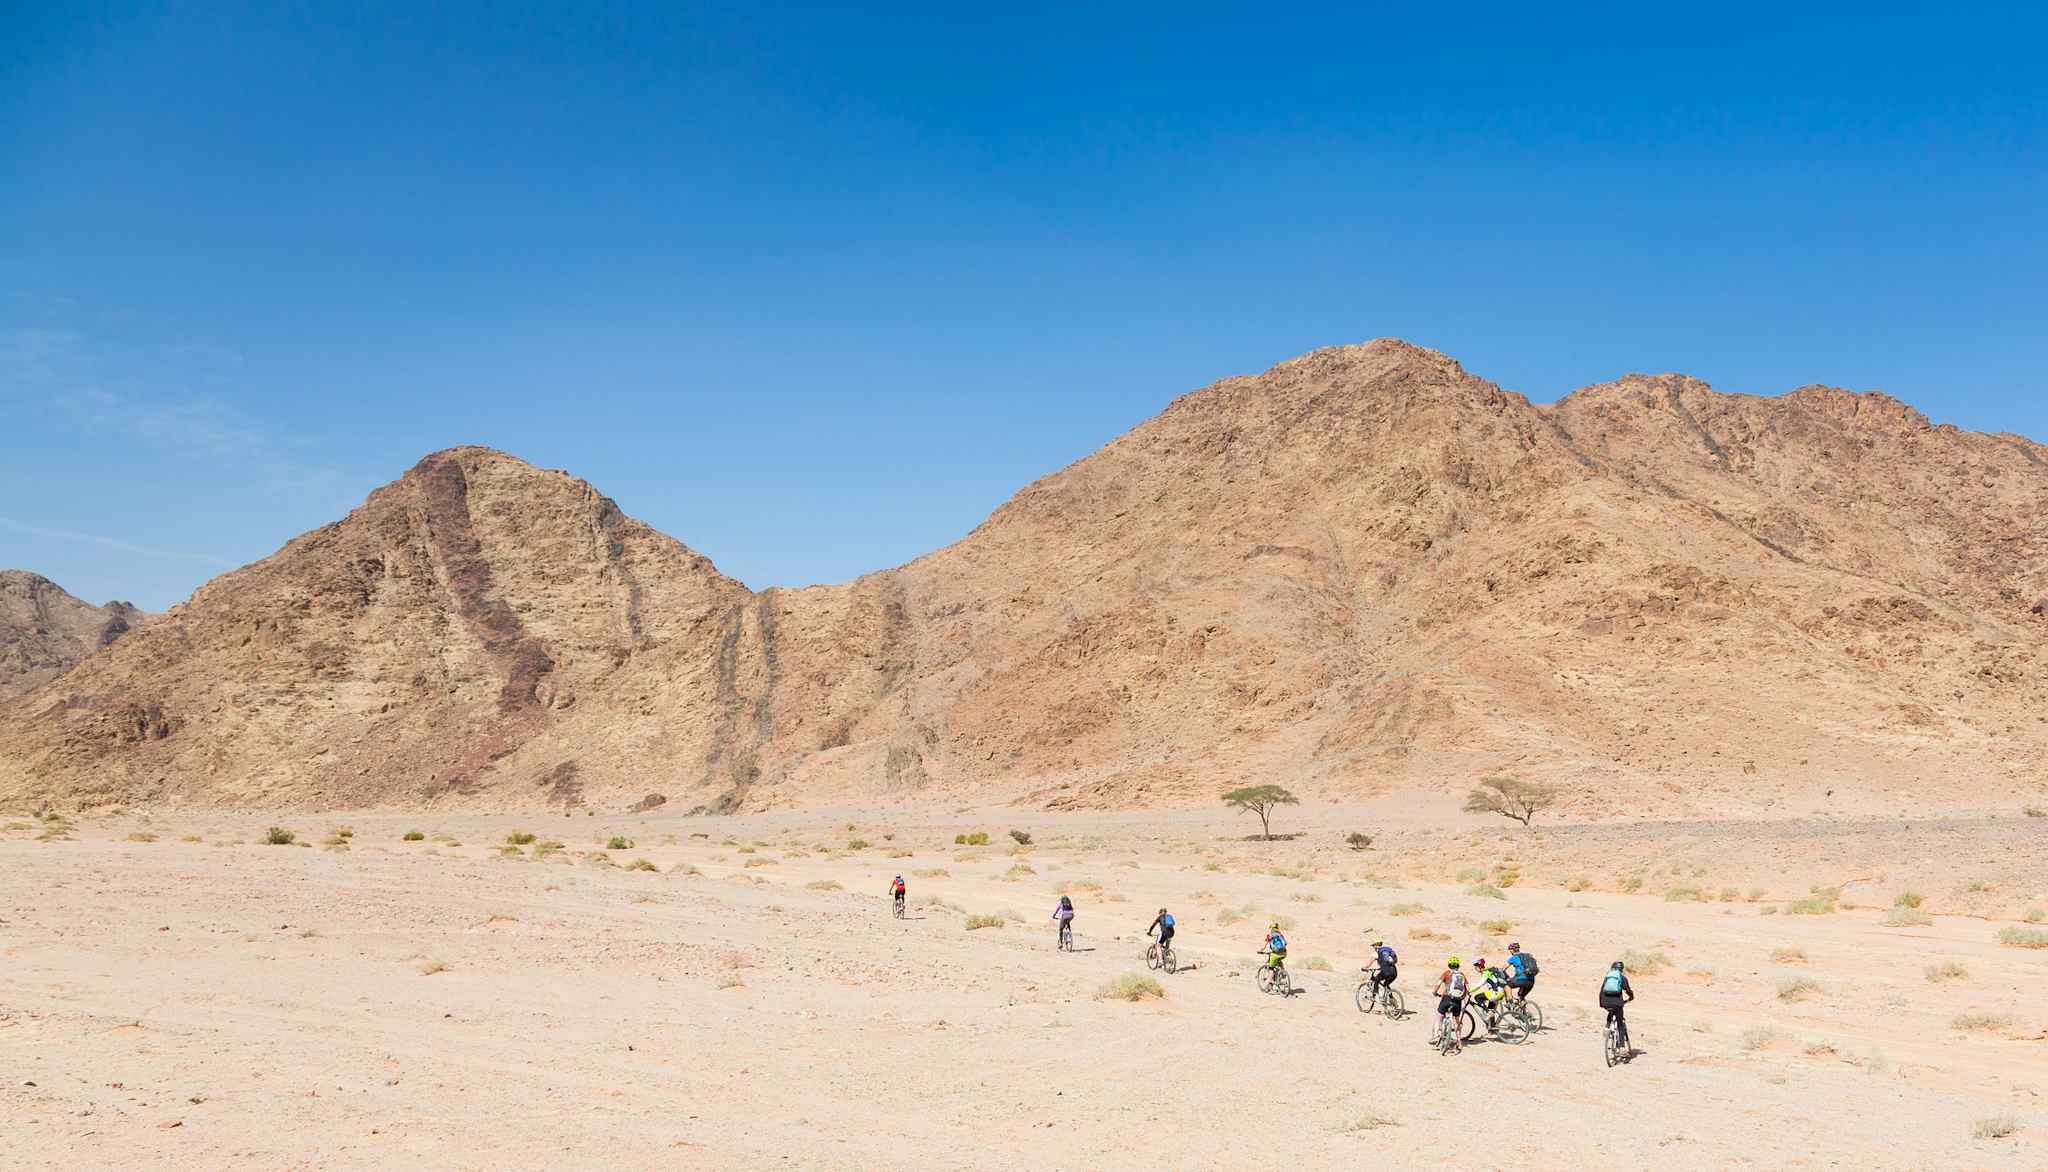  Group of mountain bikers passing a section of the Jordan Desert near Wadi Rum